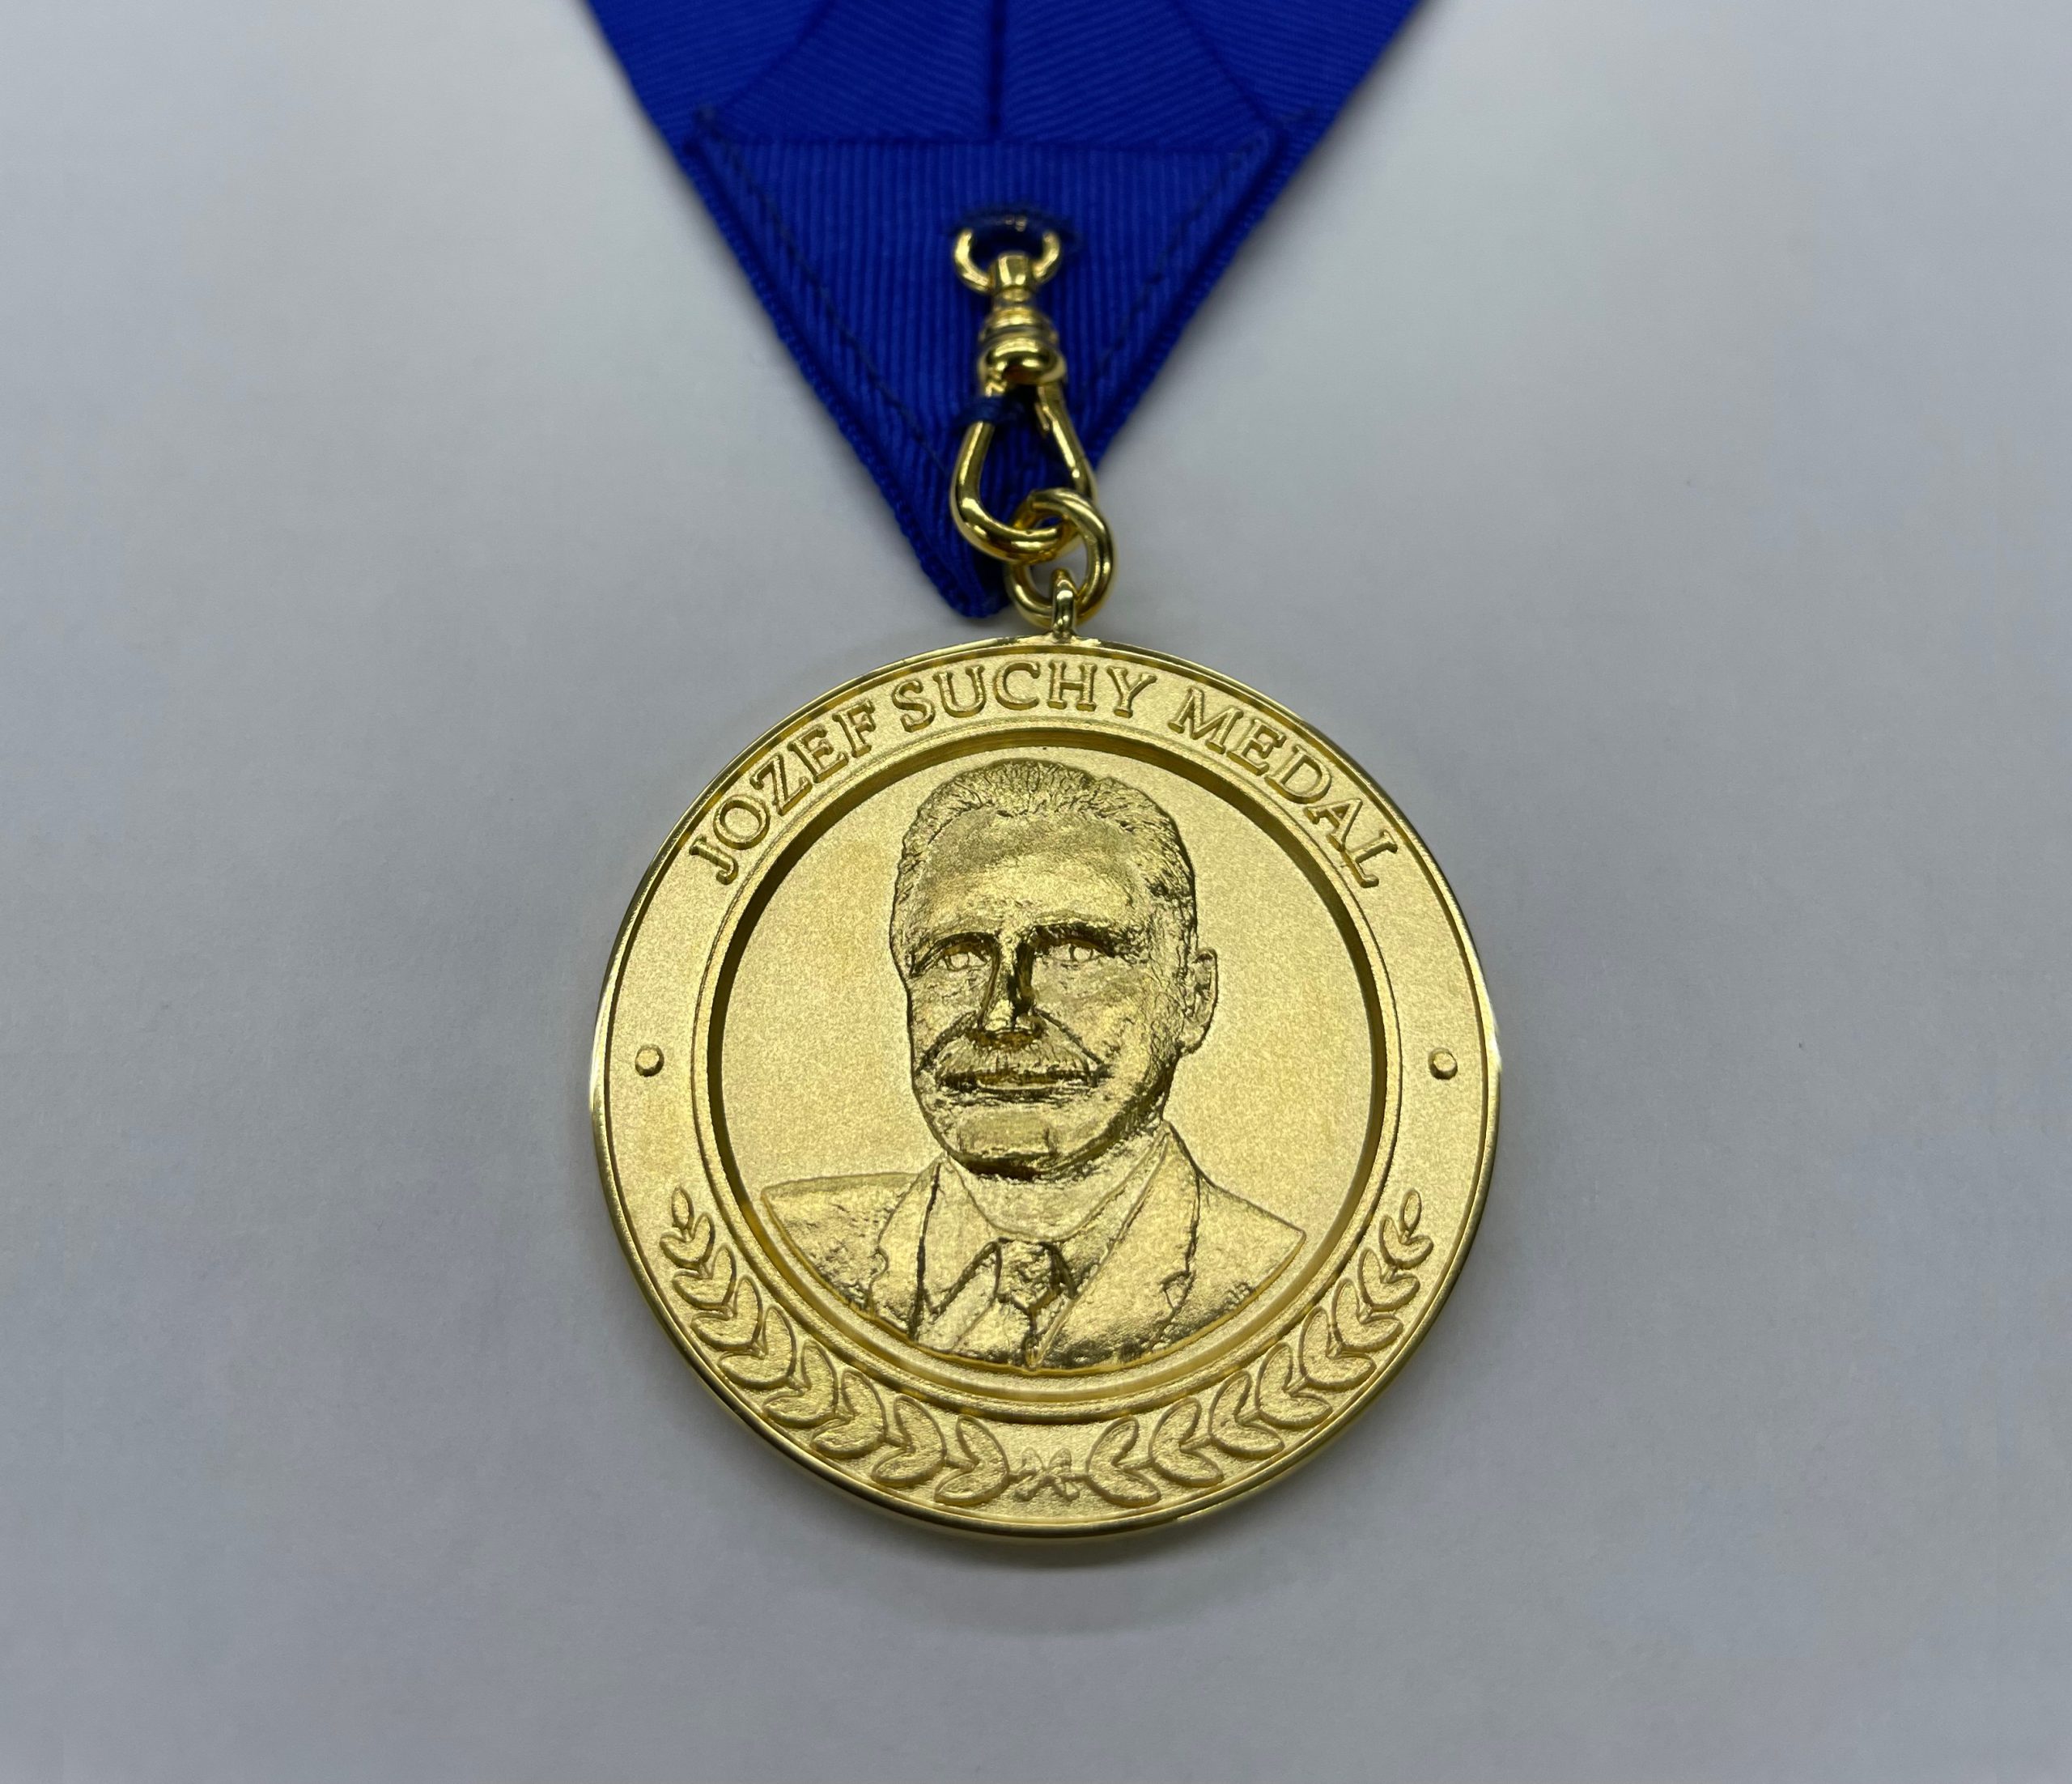 The World Foundry Organization世界鋳造協会のジョセフ・スーチー賞のメダル